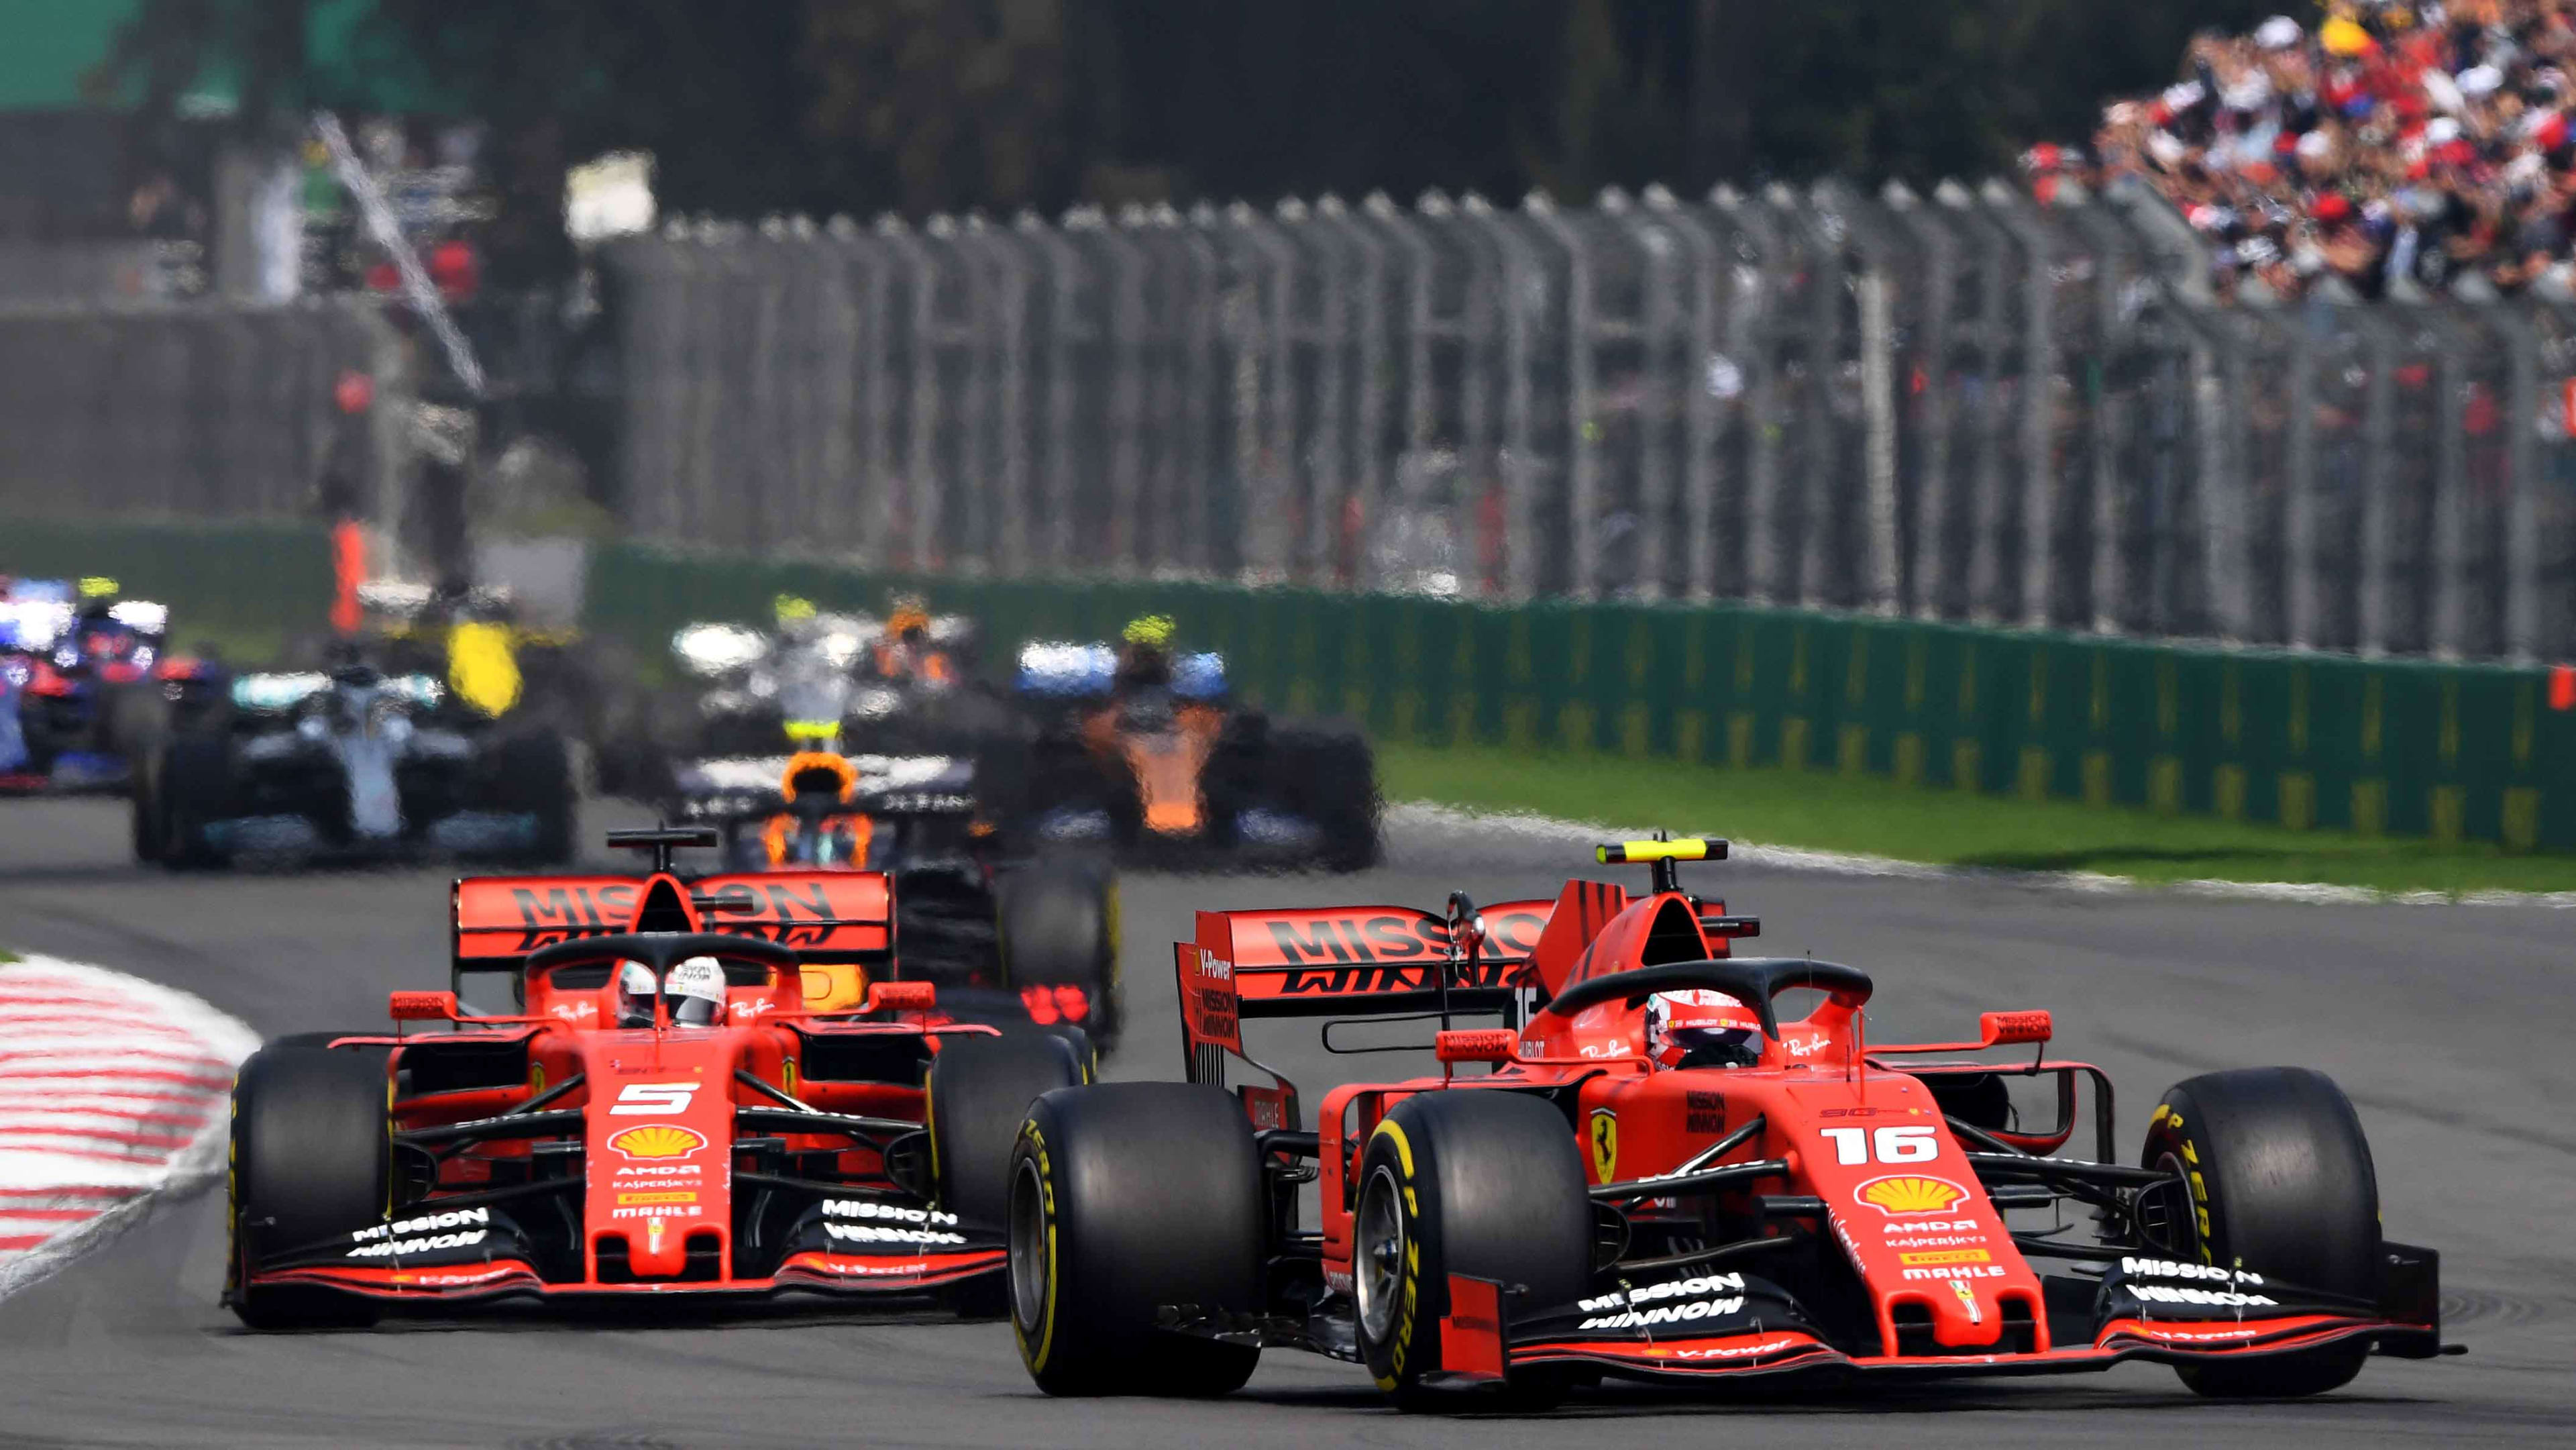 2019 United States Grand Prix Ferrari target operational sharpness in